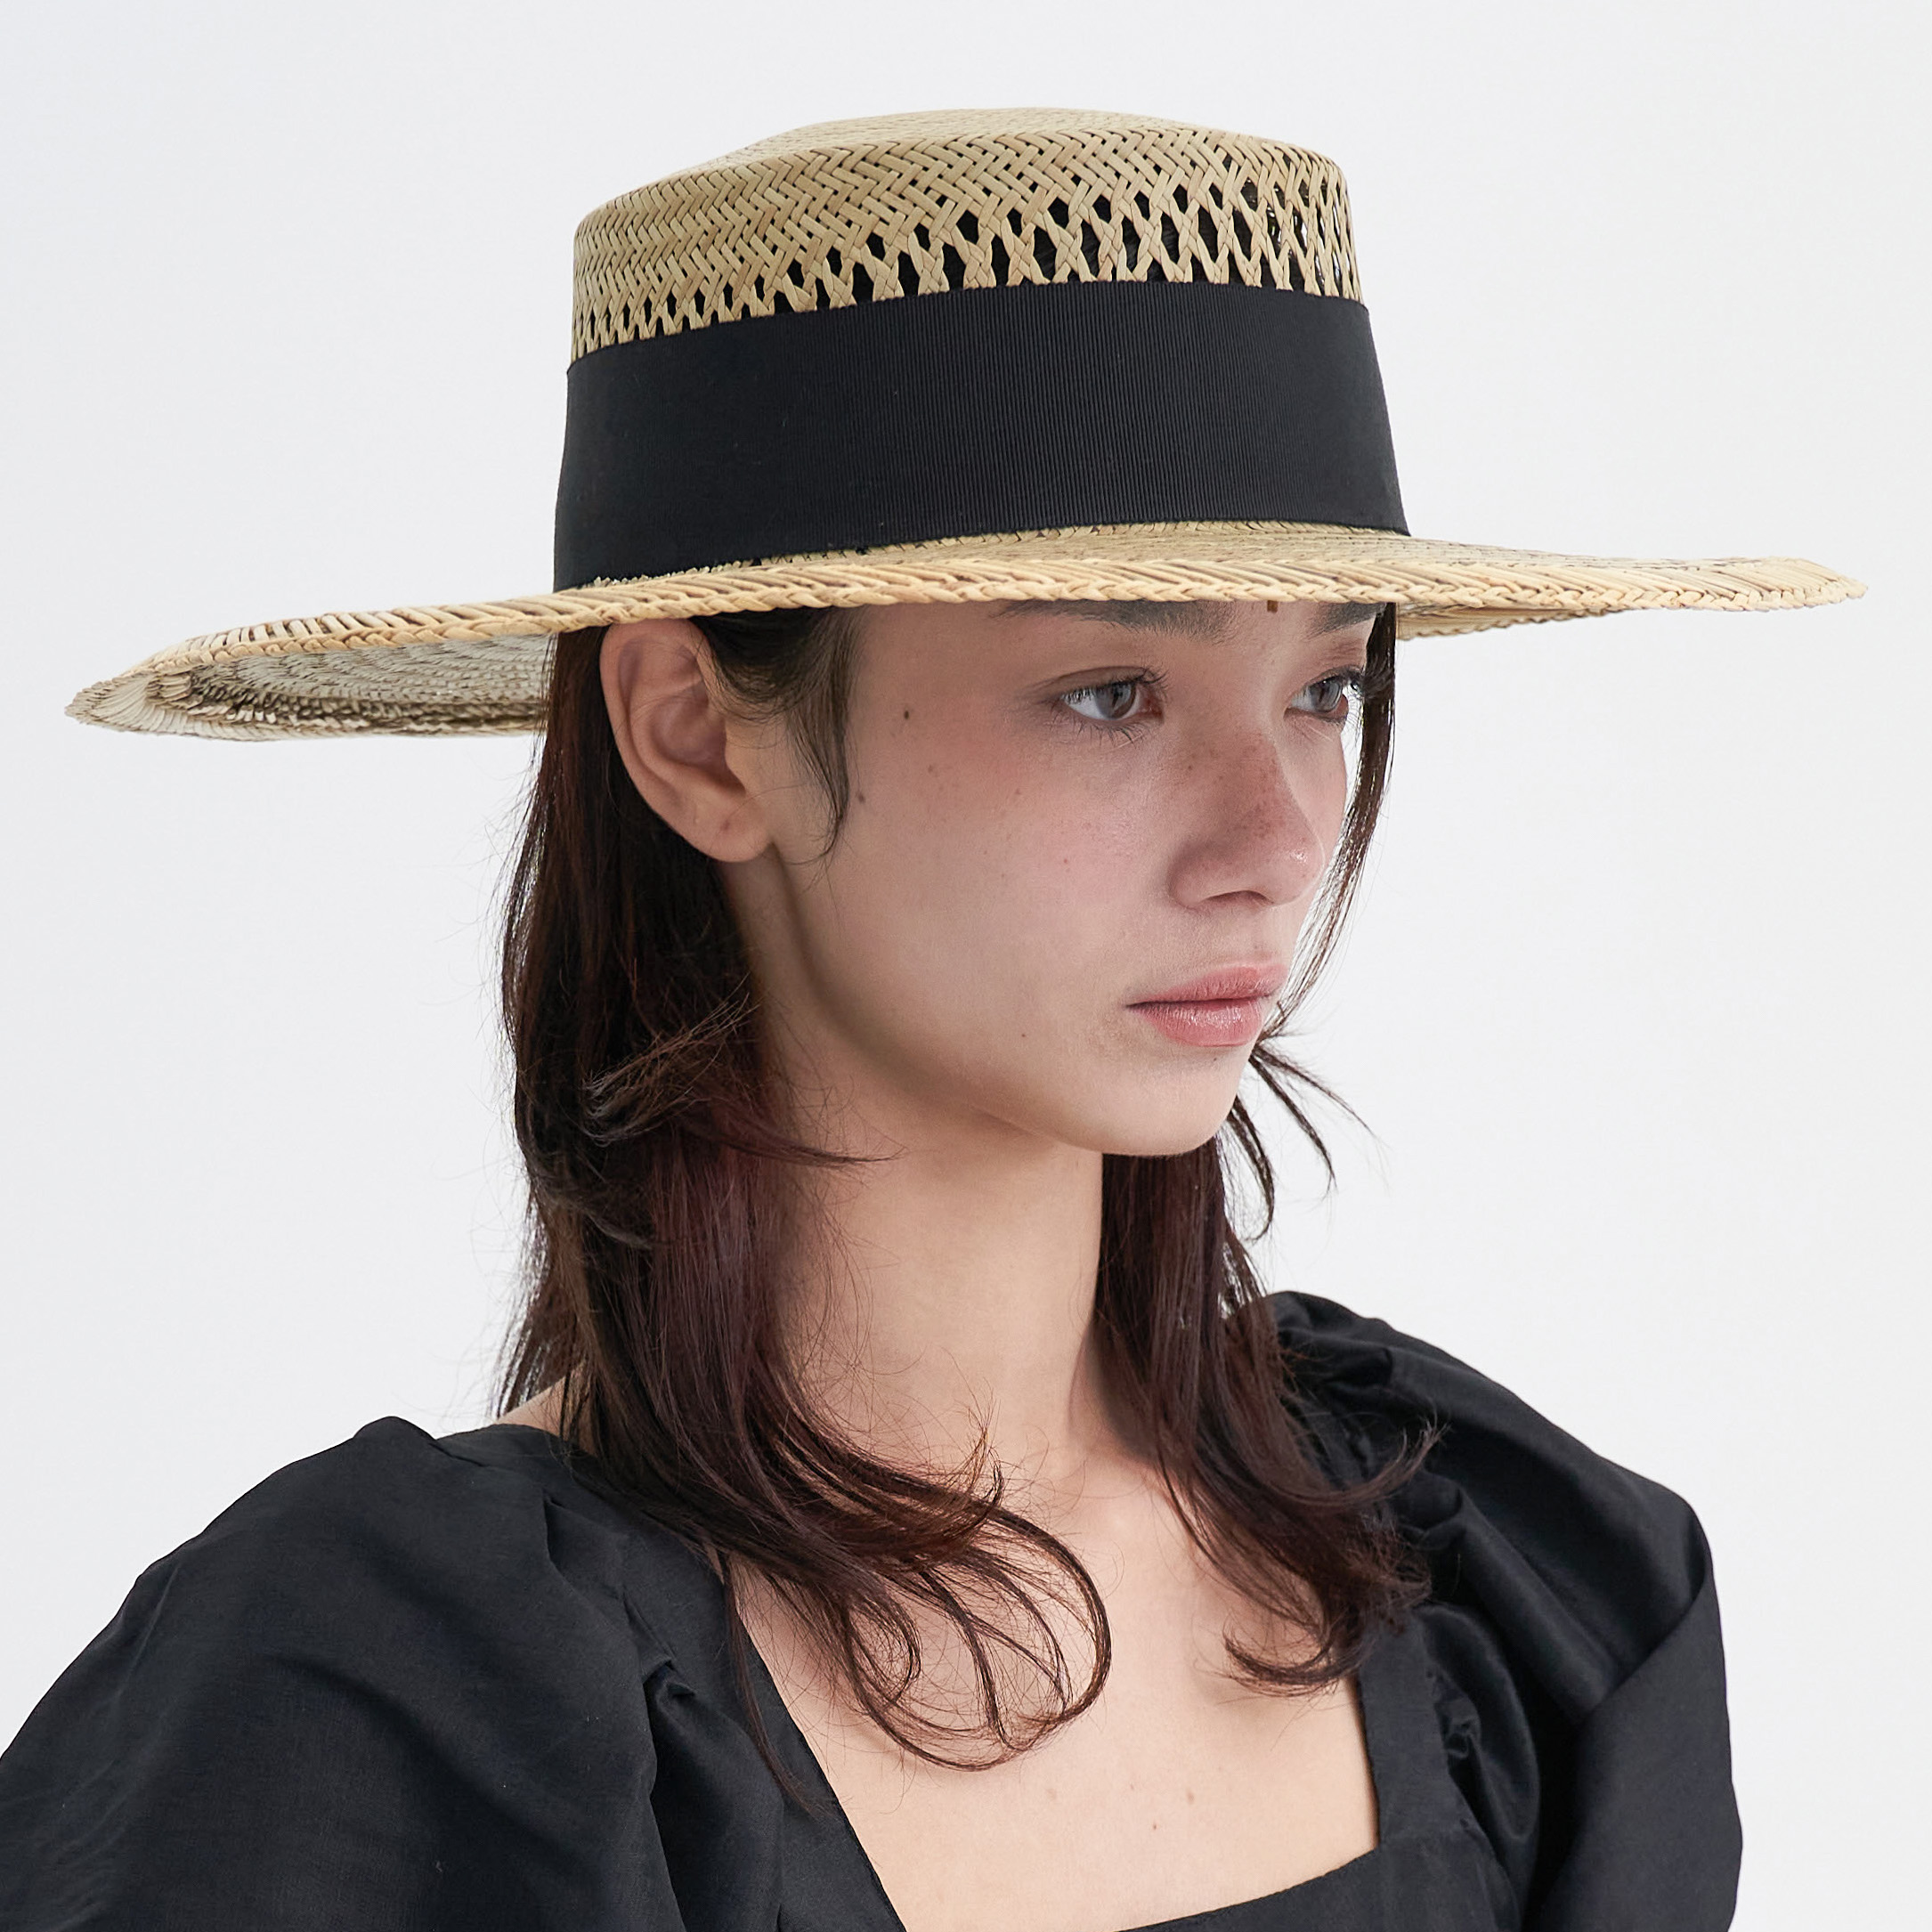 Lady Like Boater Hat